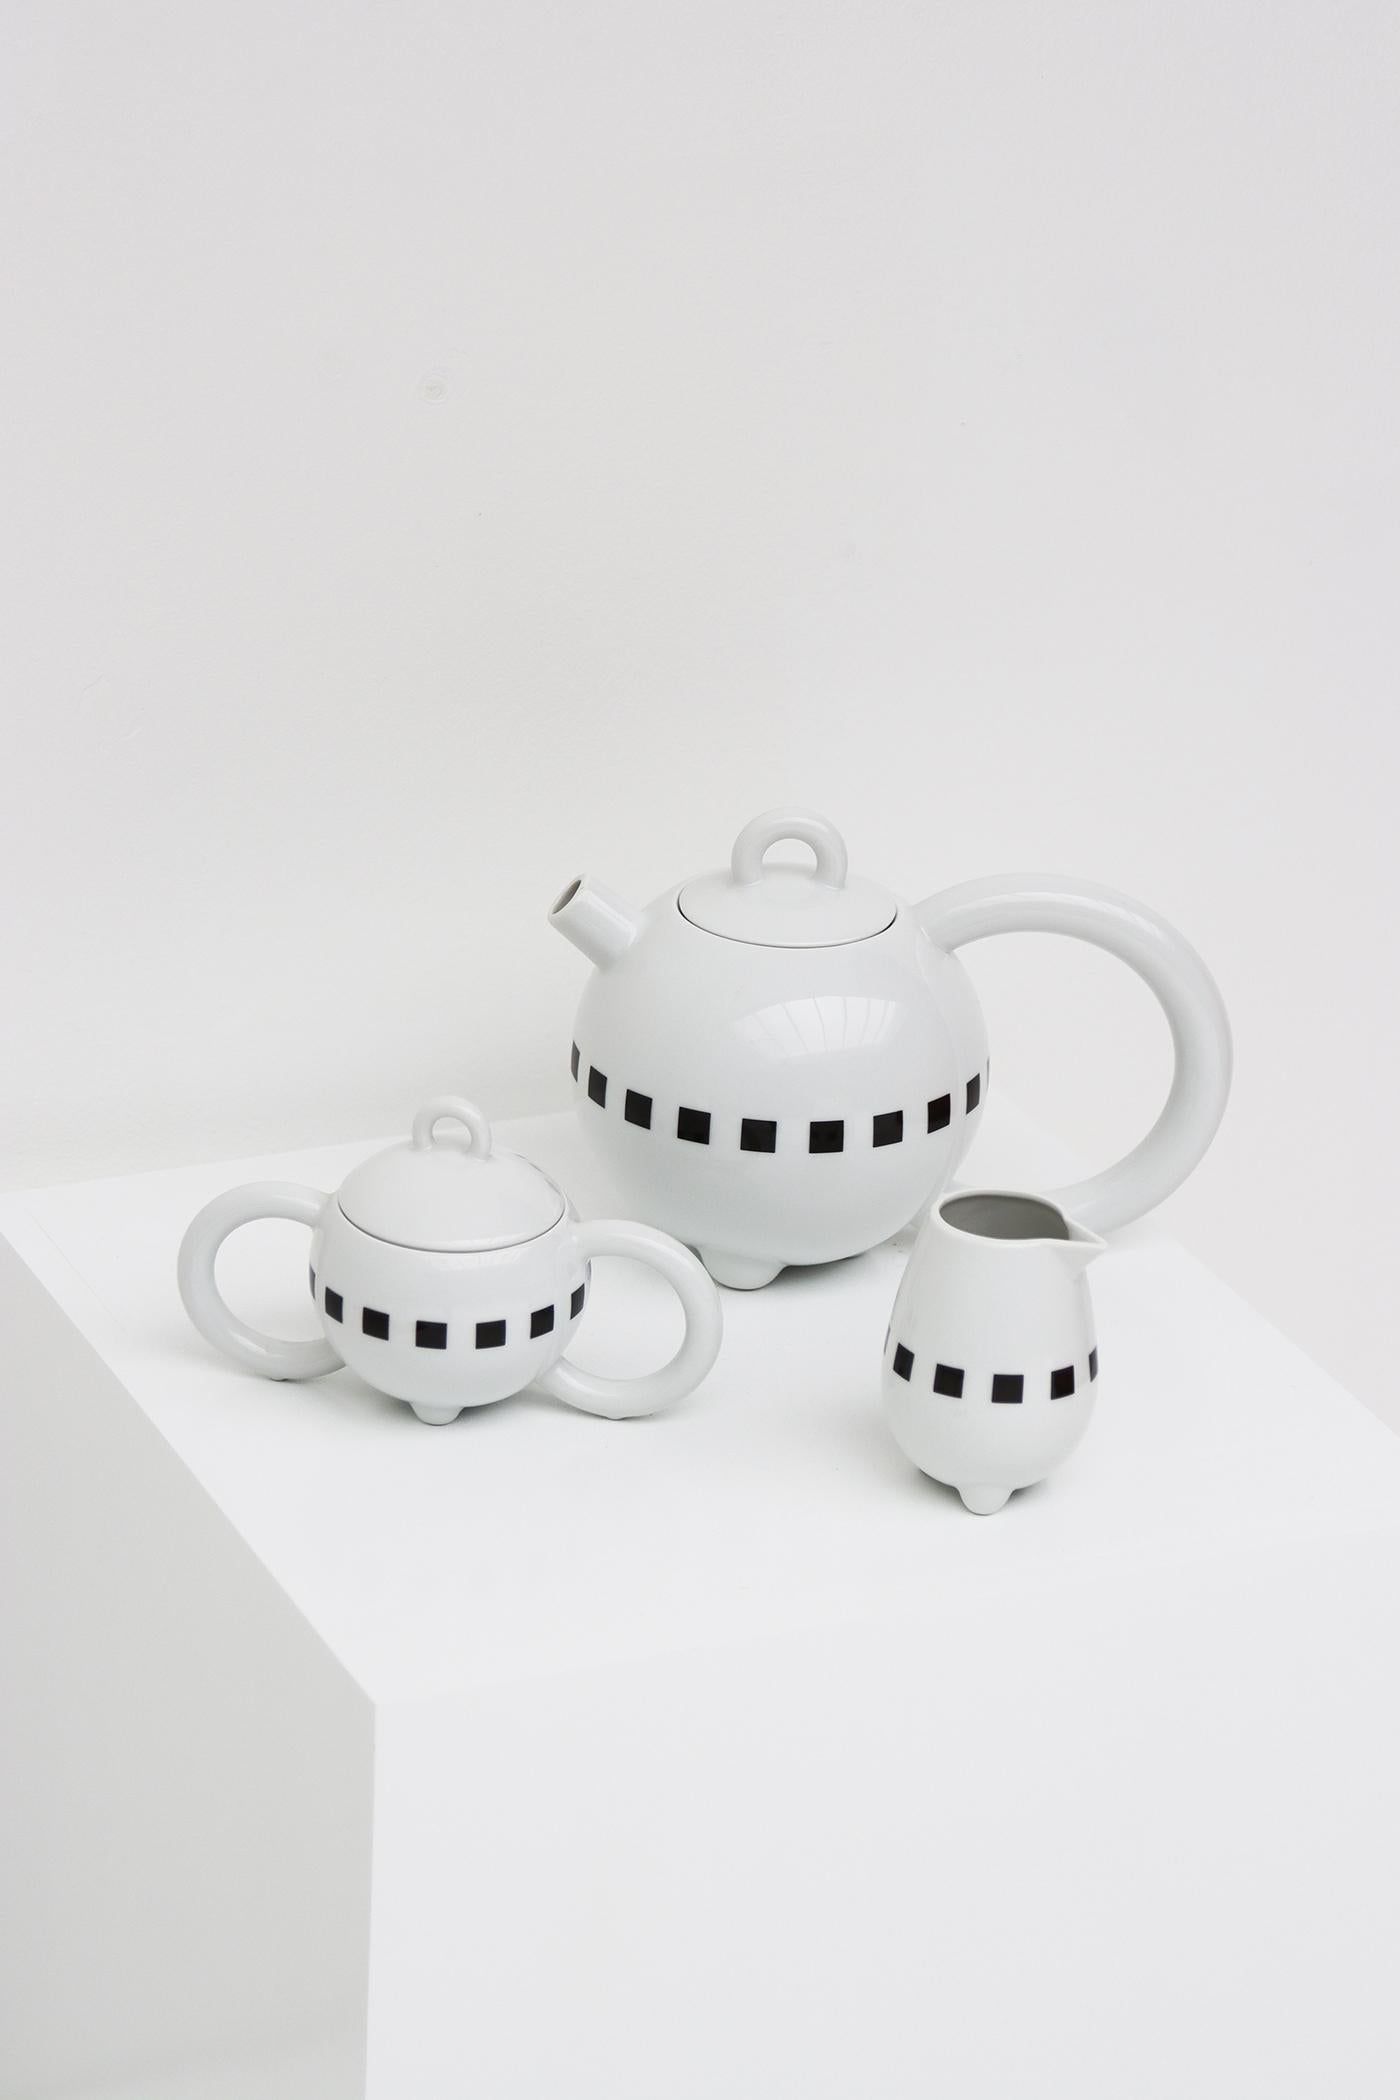 Modern Matteo Thun Fantasia Porcelain Tea Set